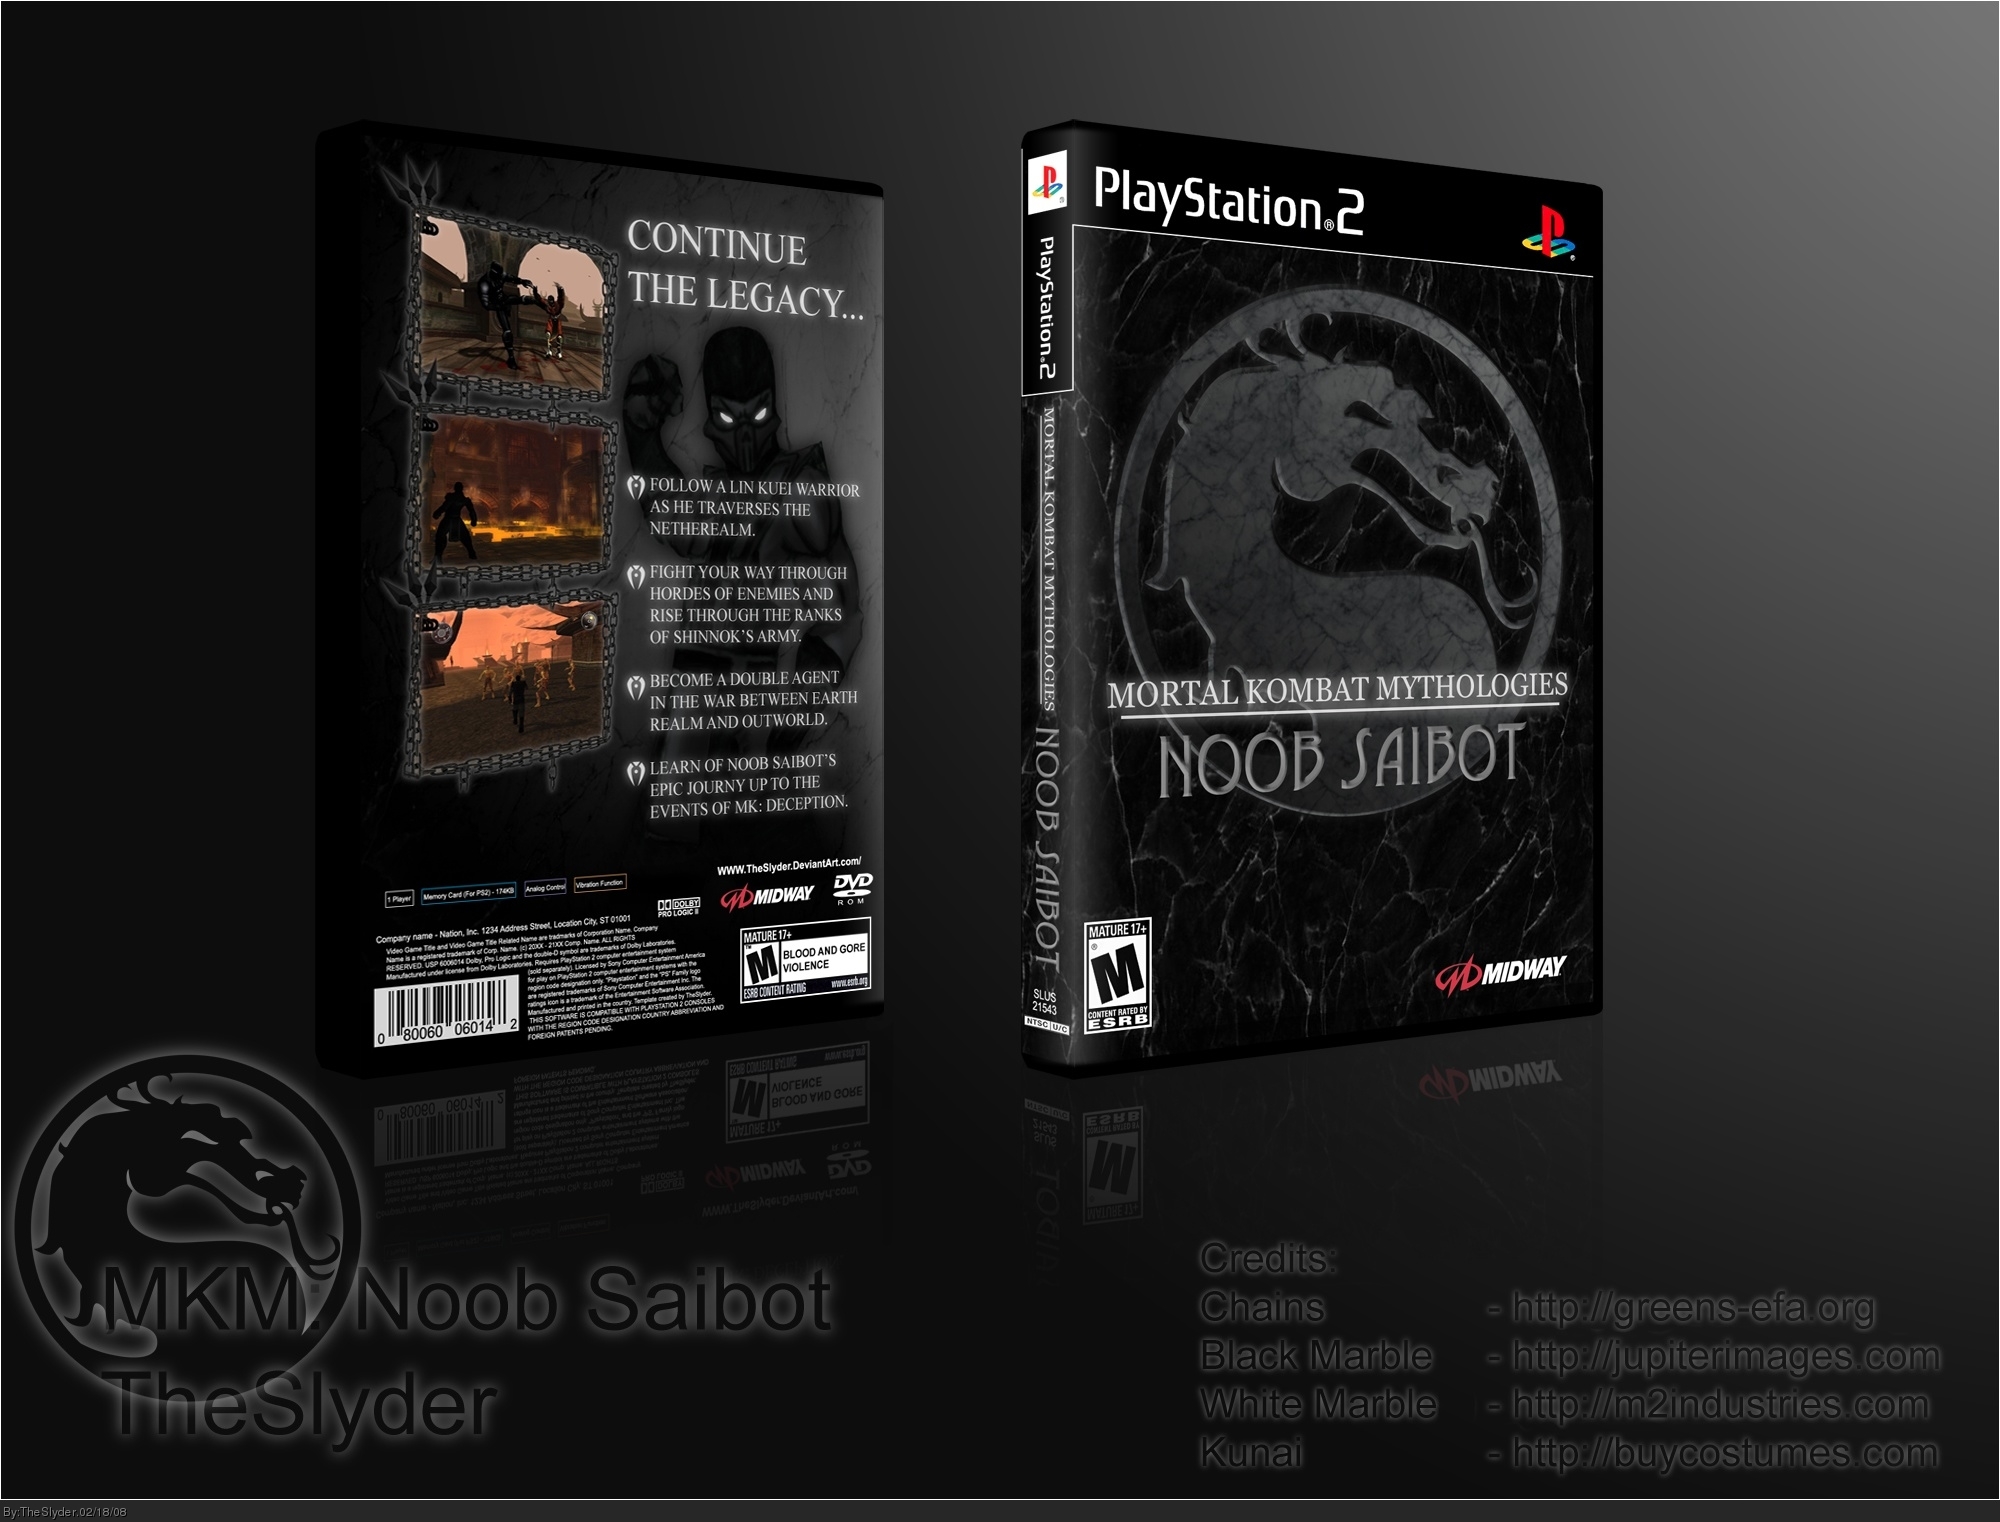 Mortal Kombat Mythologies: Noob Saibot box cover